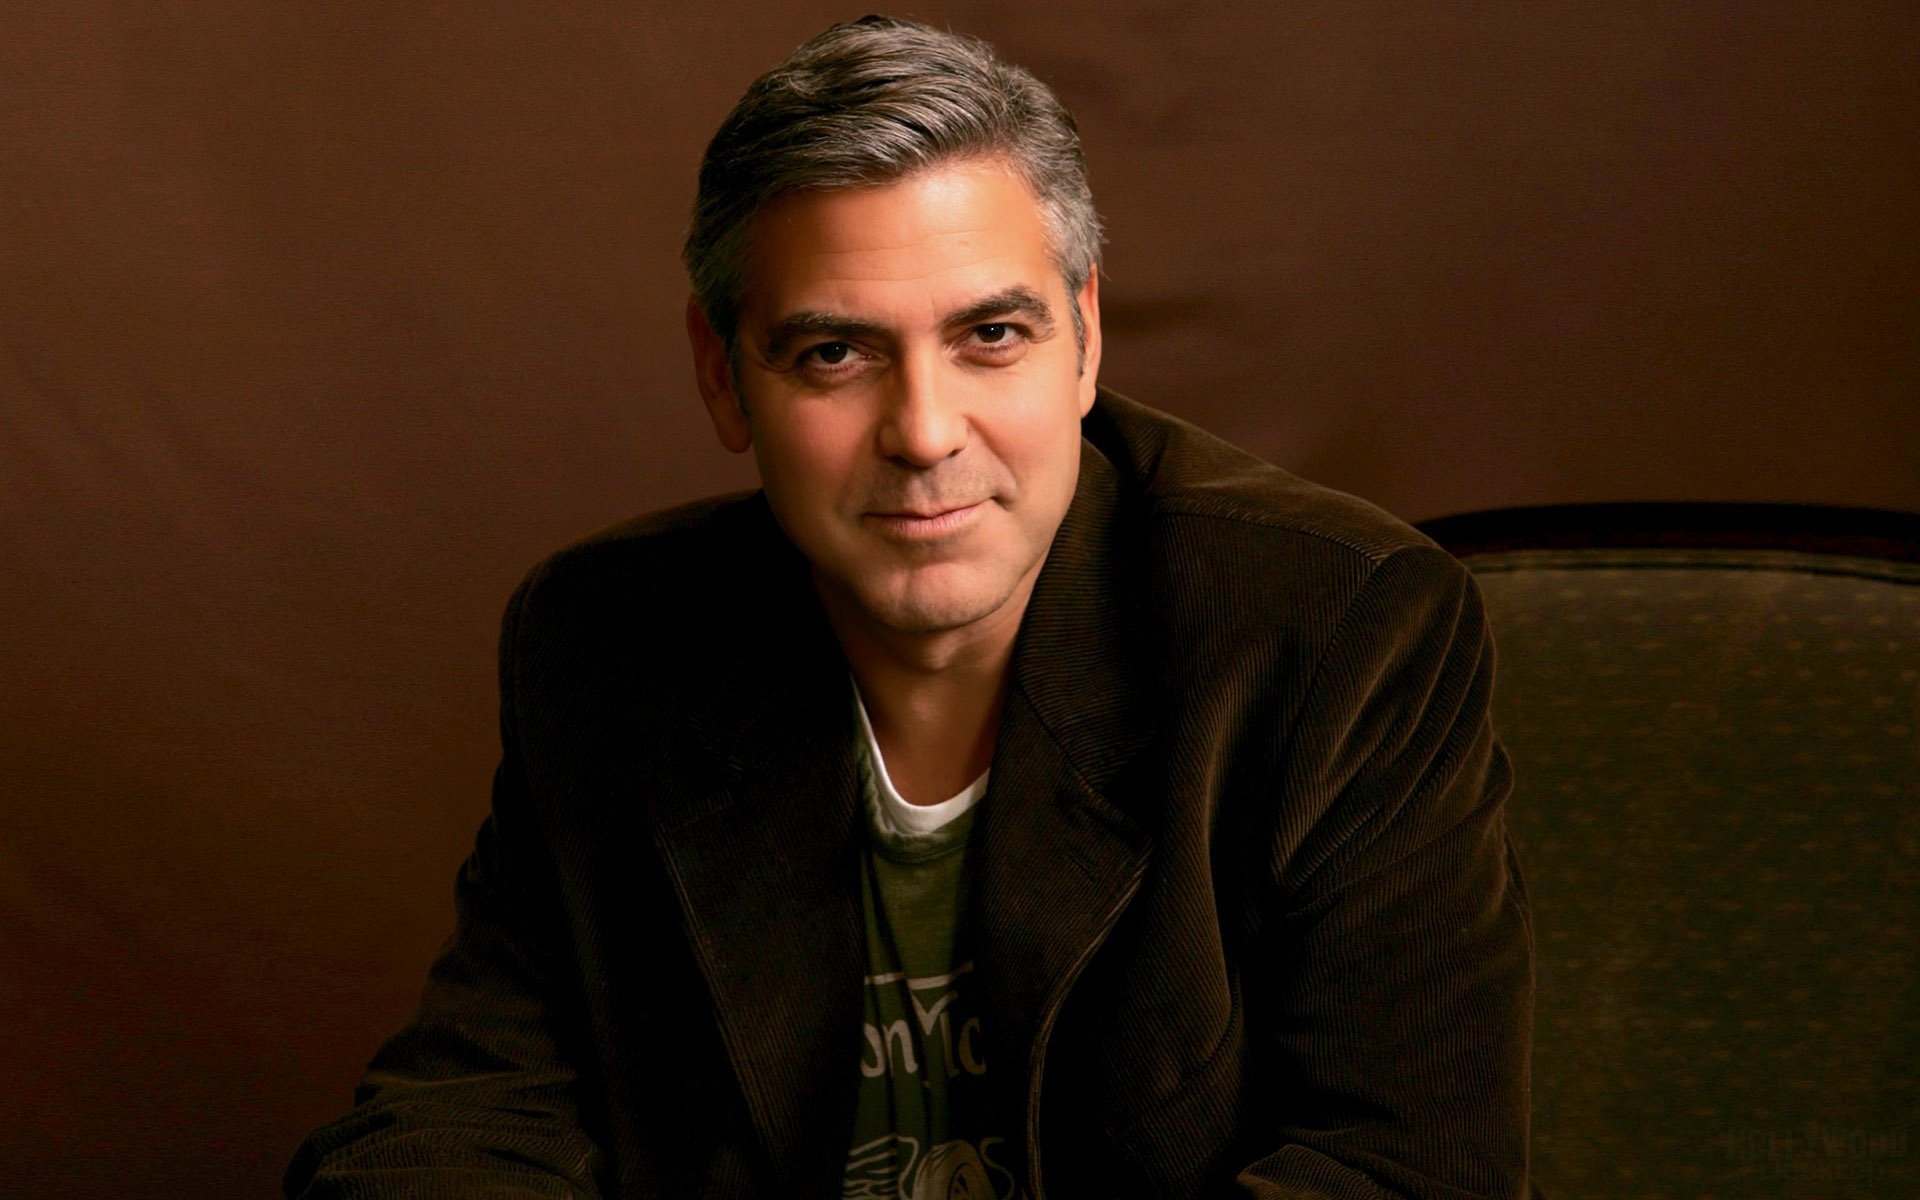 George Clooney, HD wallpaper, Striking background image, Mesmerizing presence, 1920x1200 HD Desktop